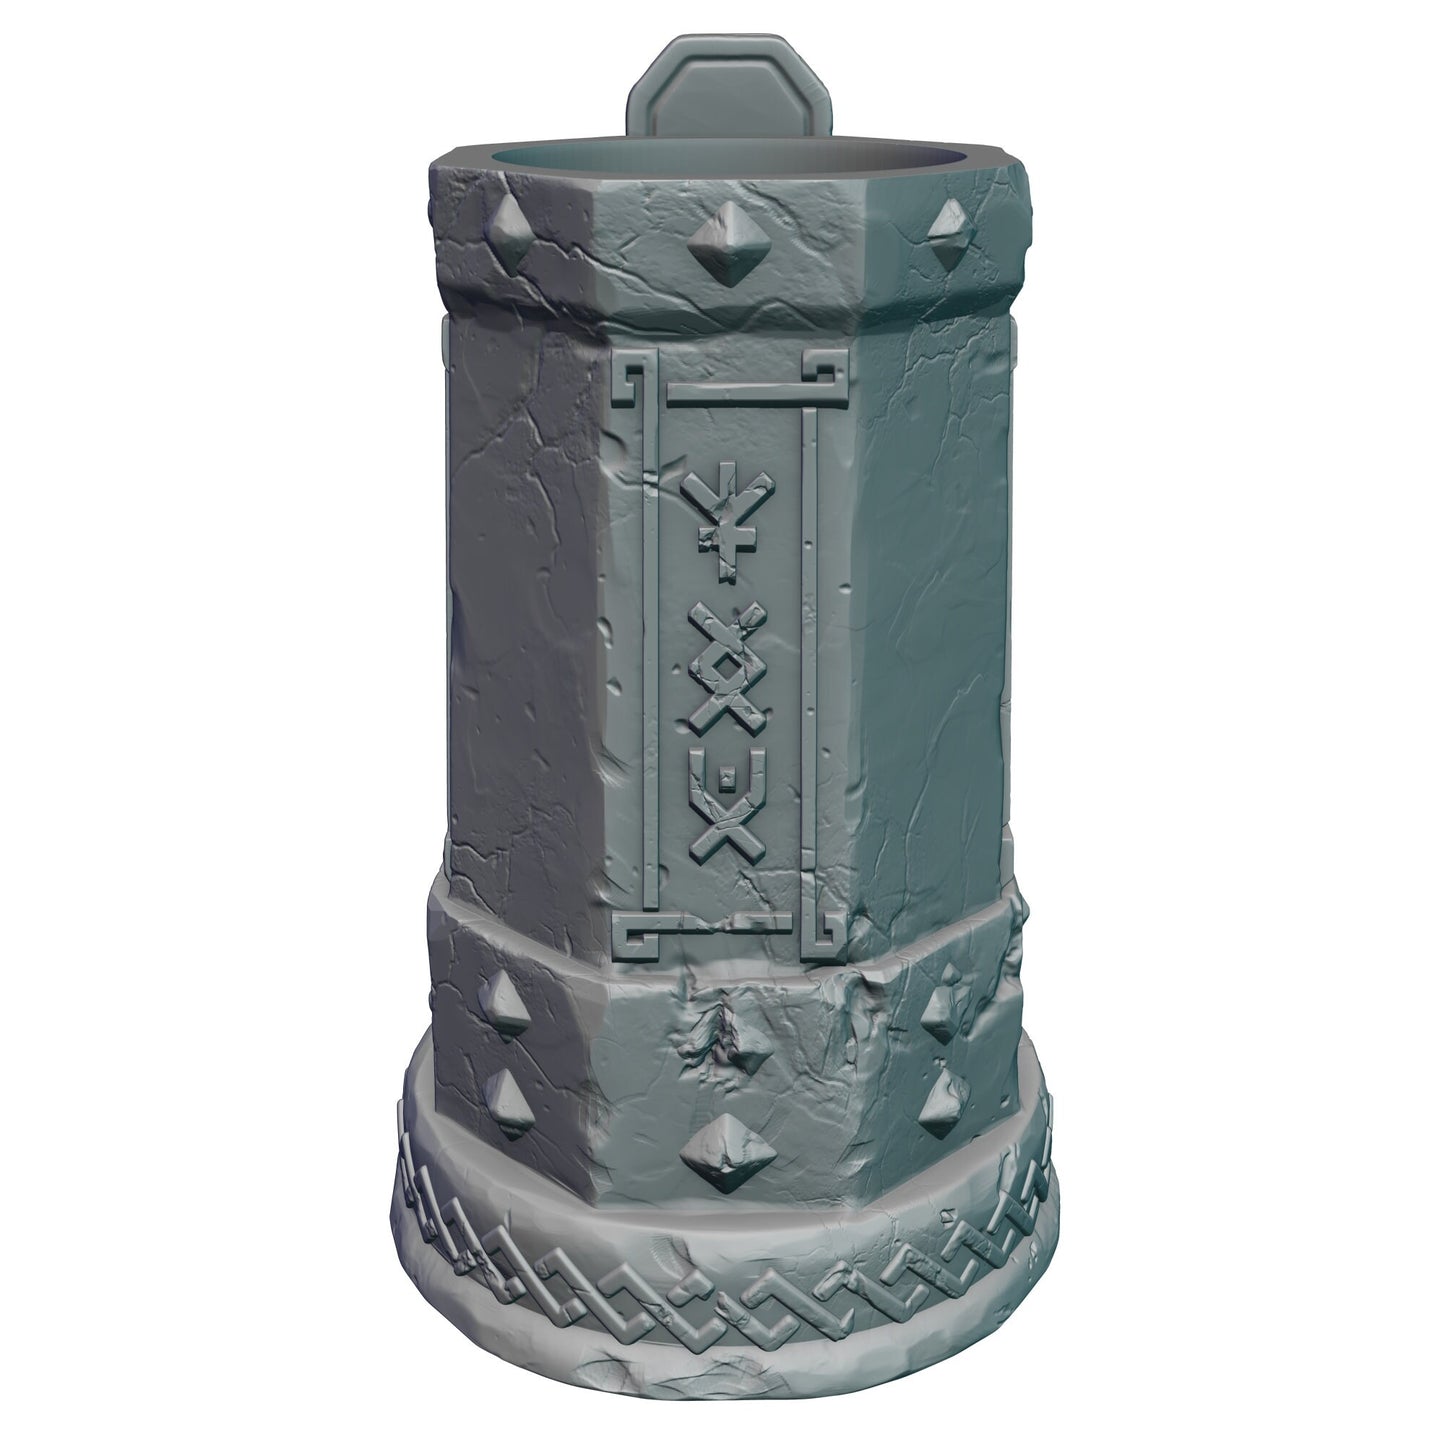 Dwarven 3D Printed Mythic Mug Drink Koozie | Dwarf Dice Vault | Mug Stein | Tabletop RPG Gaming Cosplay - Dungeons and Dragon DnD Wargaming